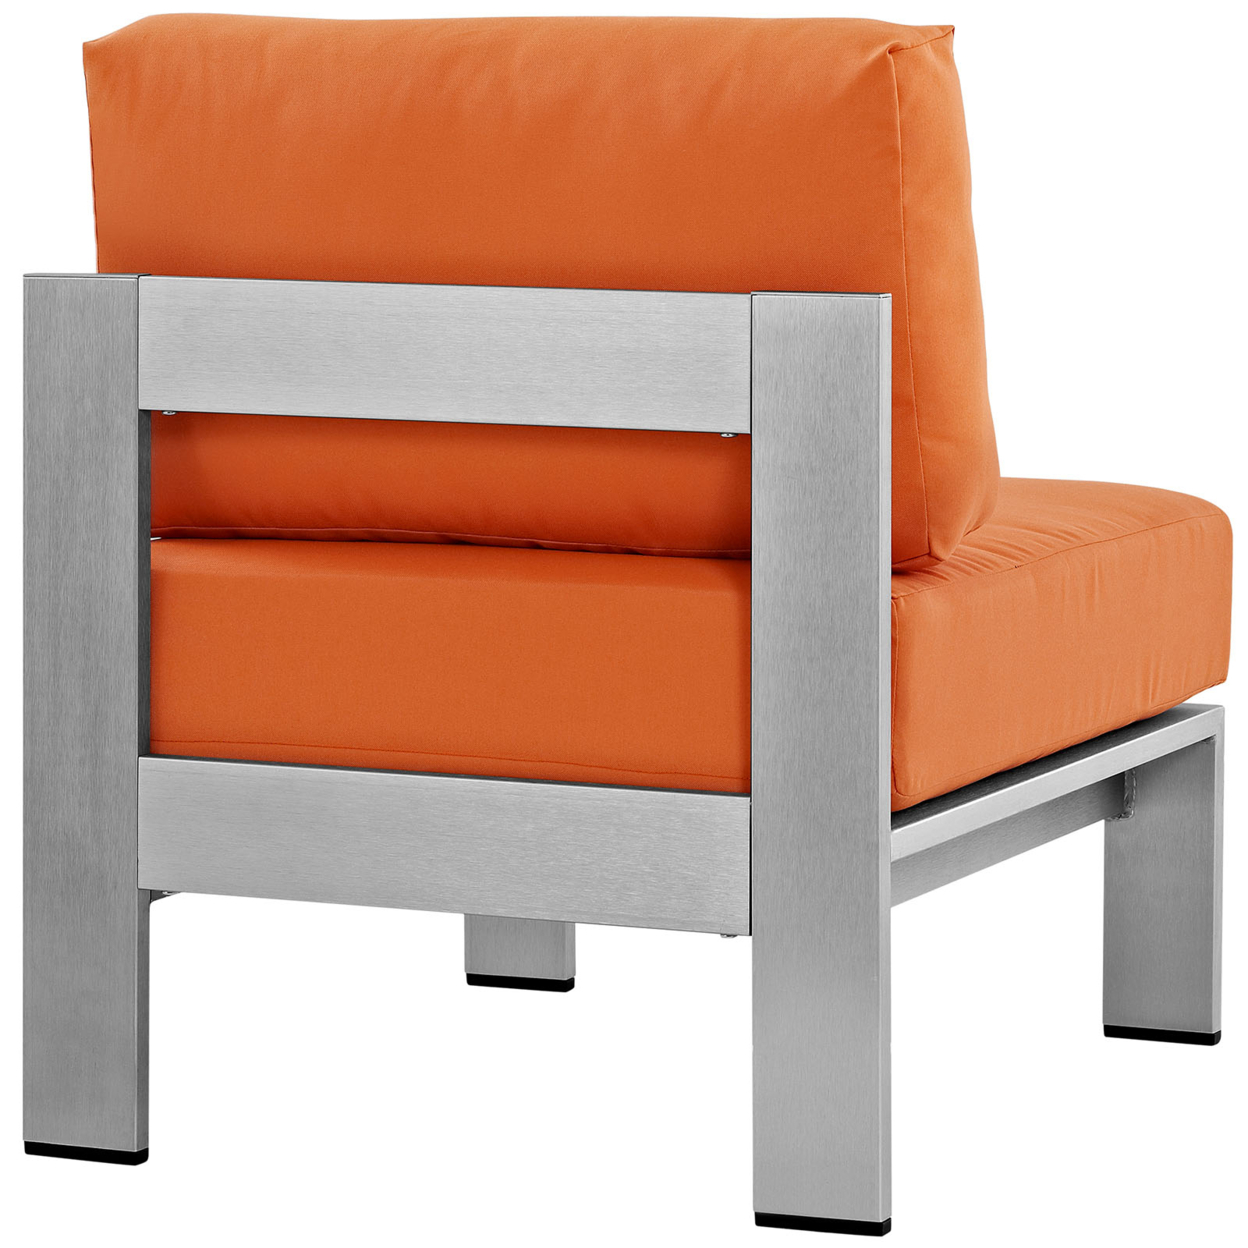 Silver Orange Shore Armless Outdoor Patio Aluminum Chair